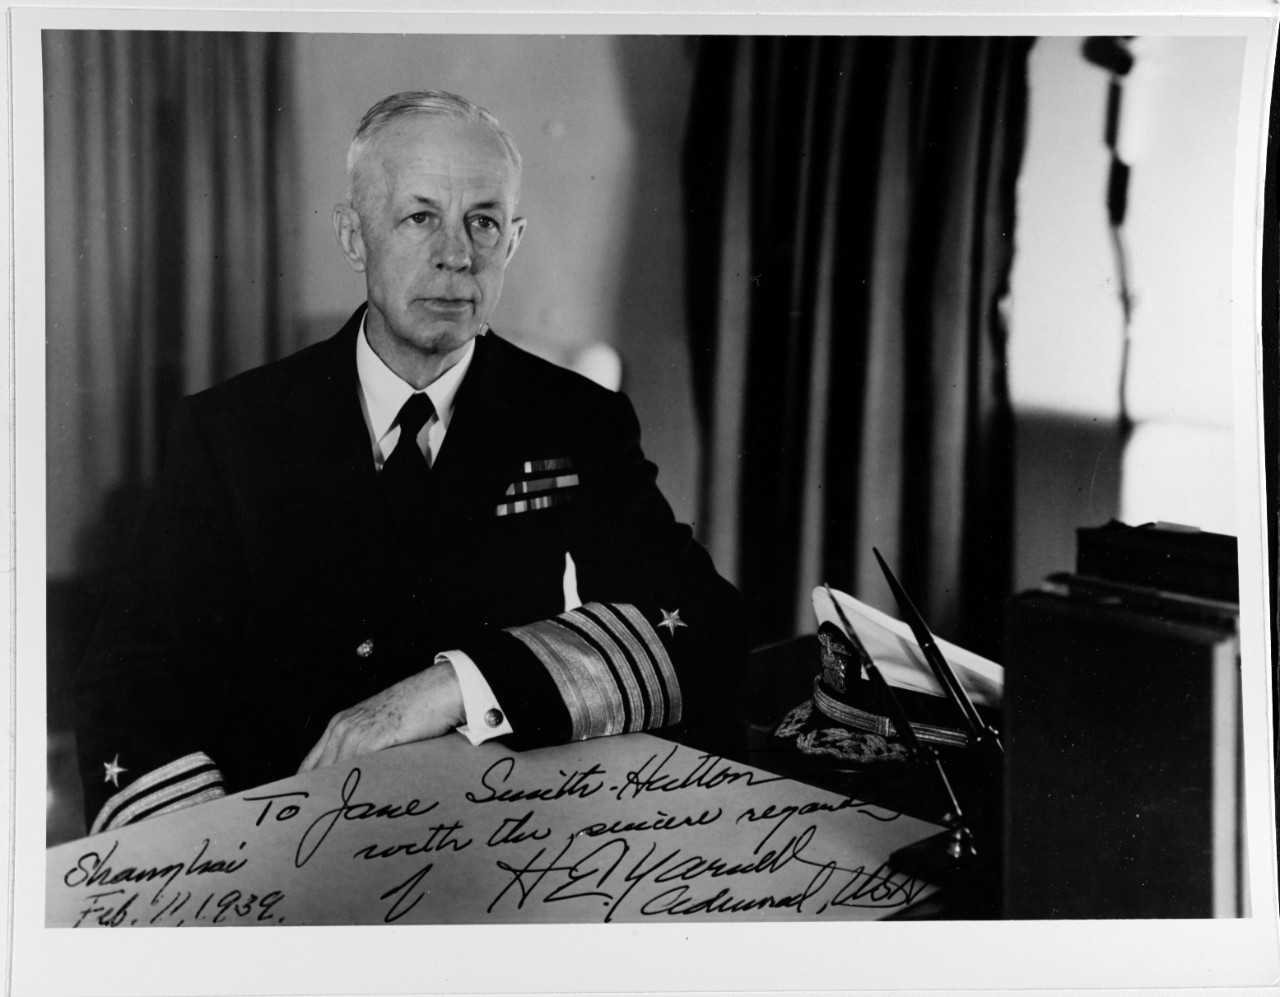 Admiral Harry E. Yarnell, USN